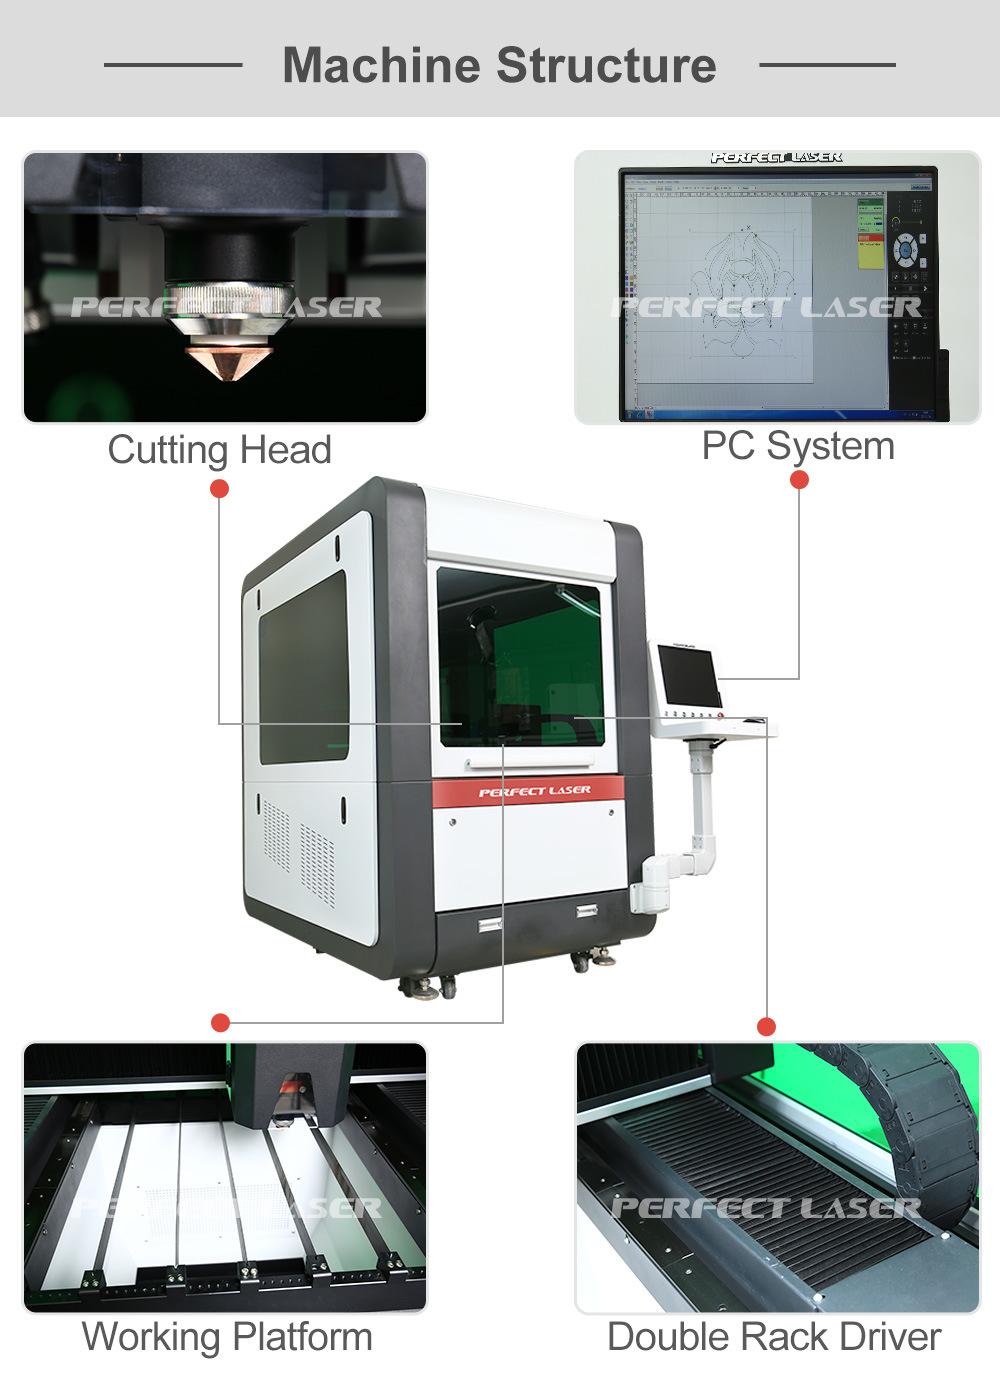 1-3mm Thin Steel Plate Small Metal Fiber Laser Cutter Cutting Machine